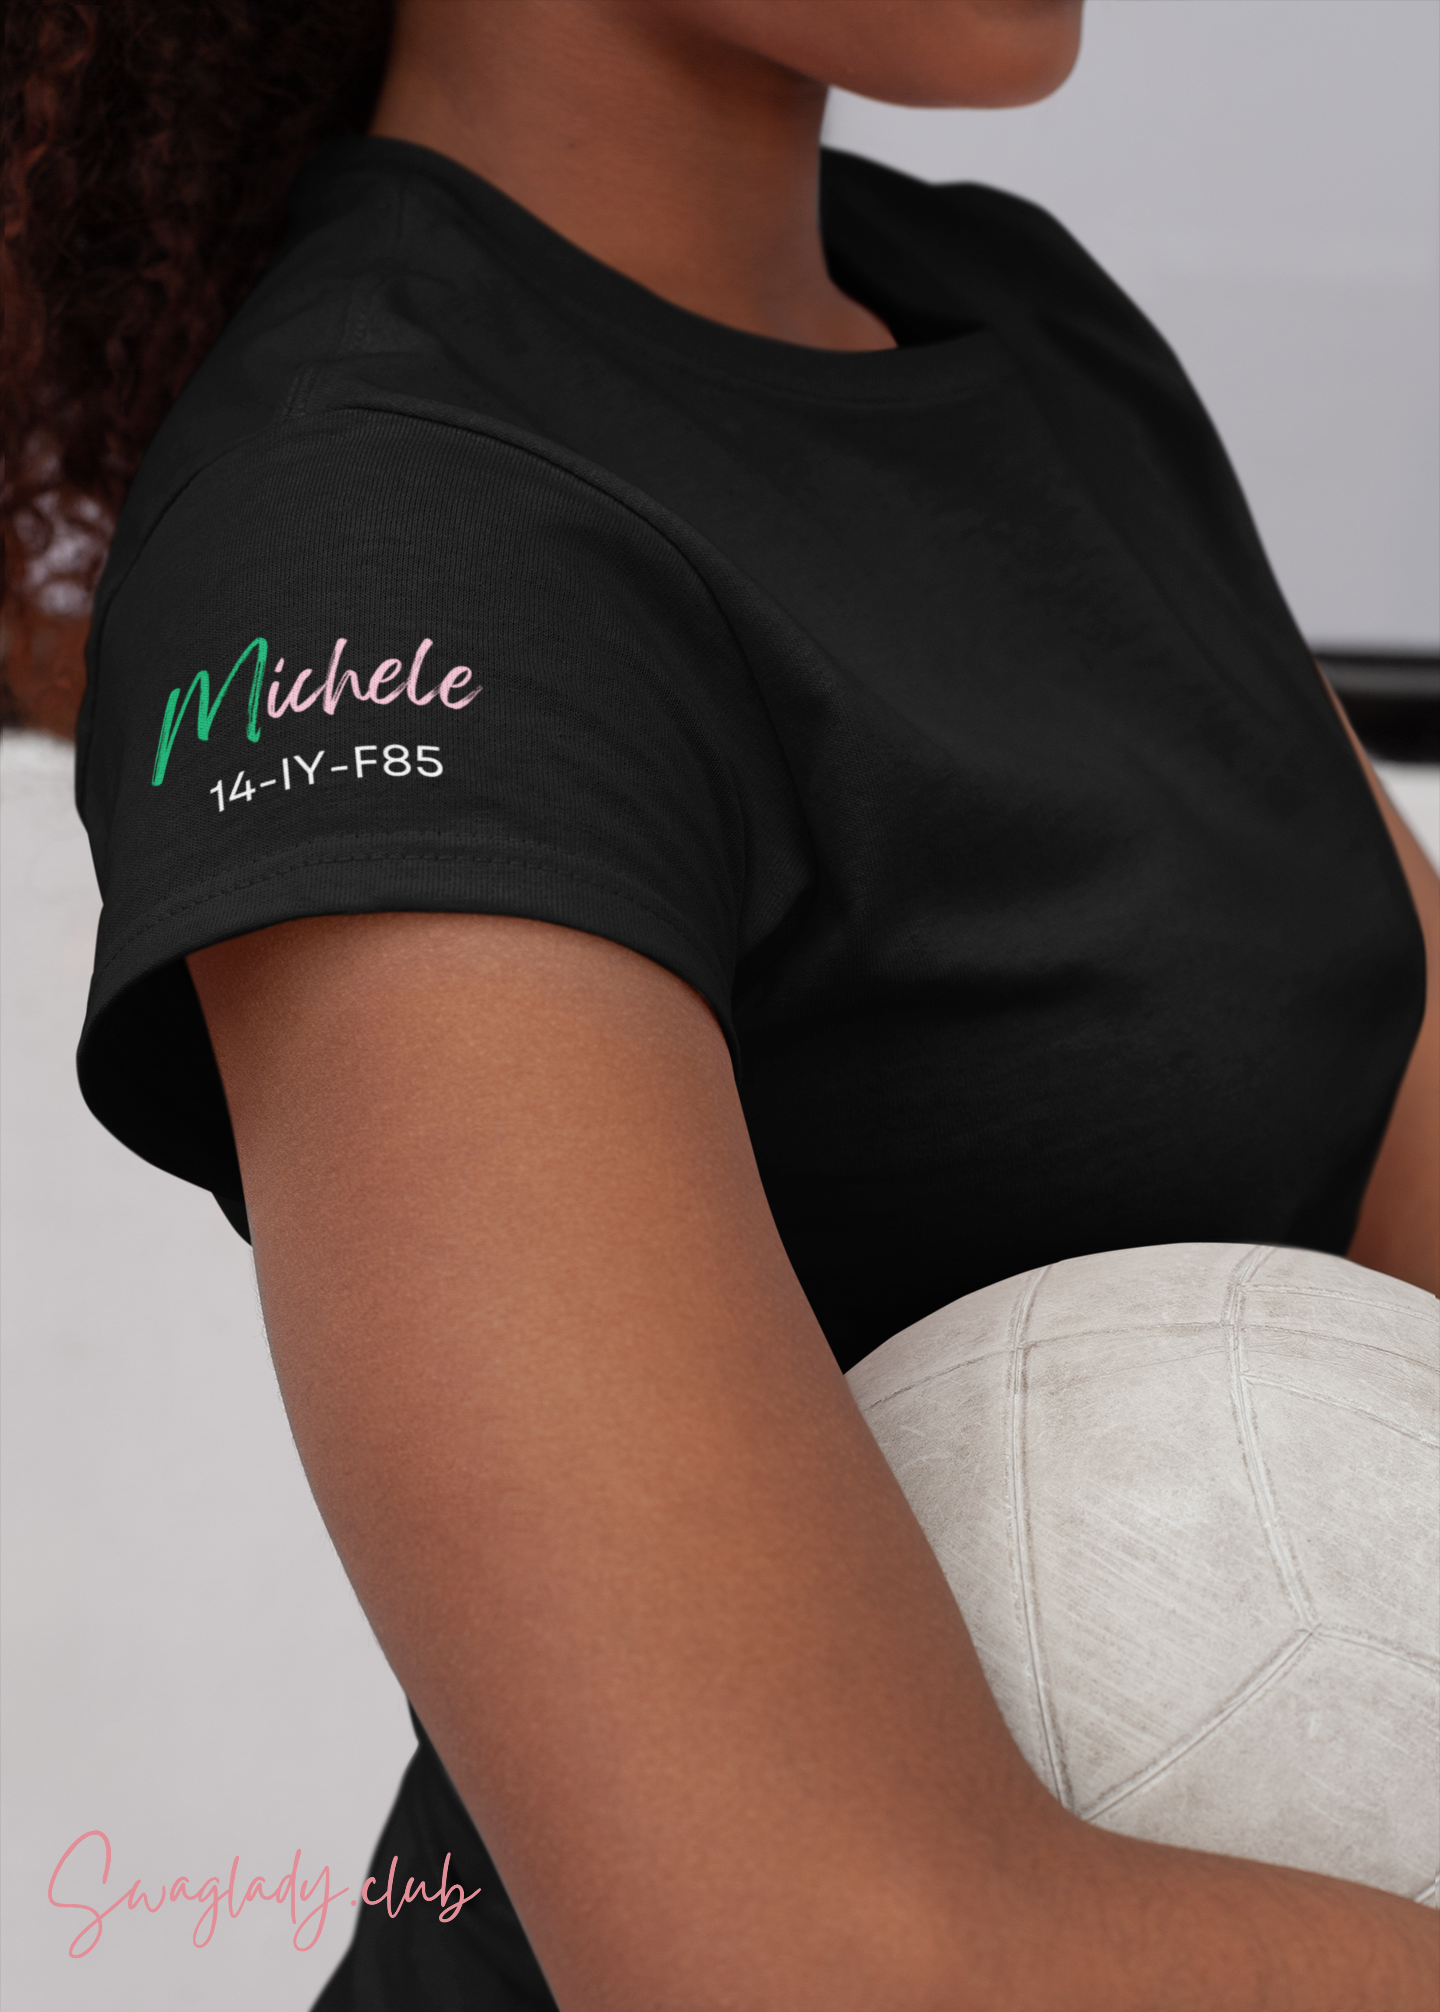 Mteule 37th Anniversary IVY Unisex t-shirt Michele #14